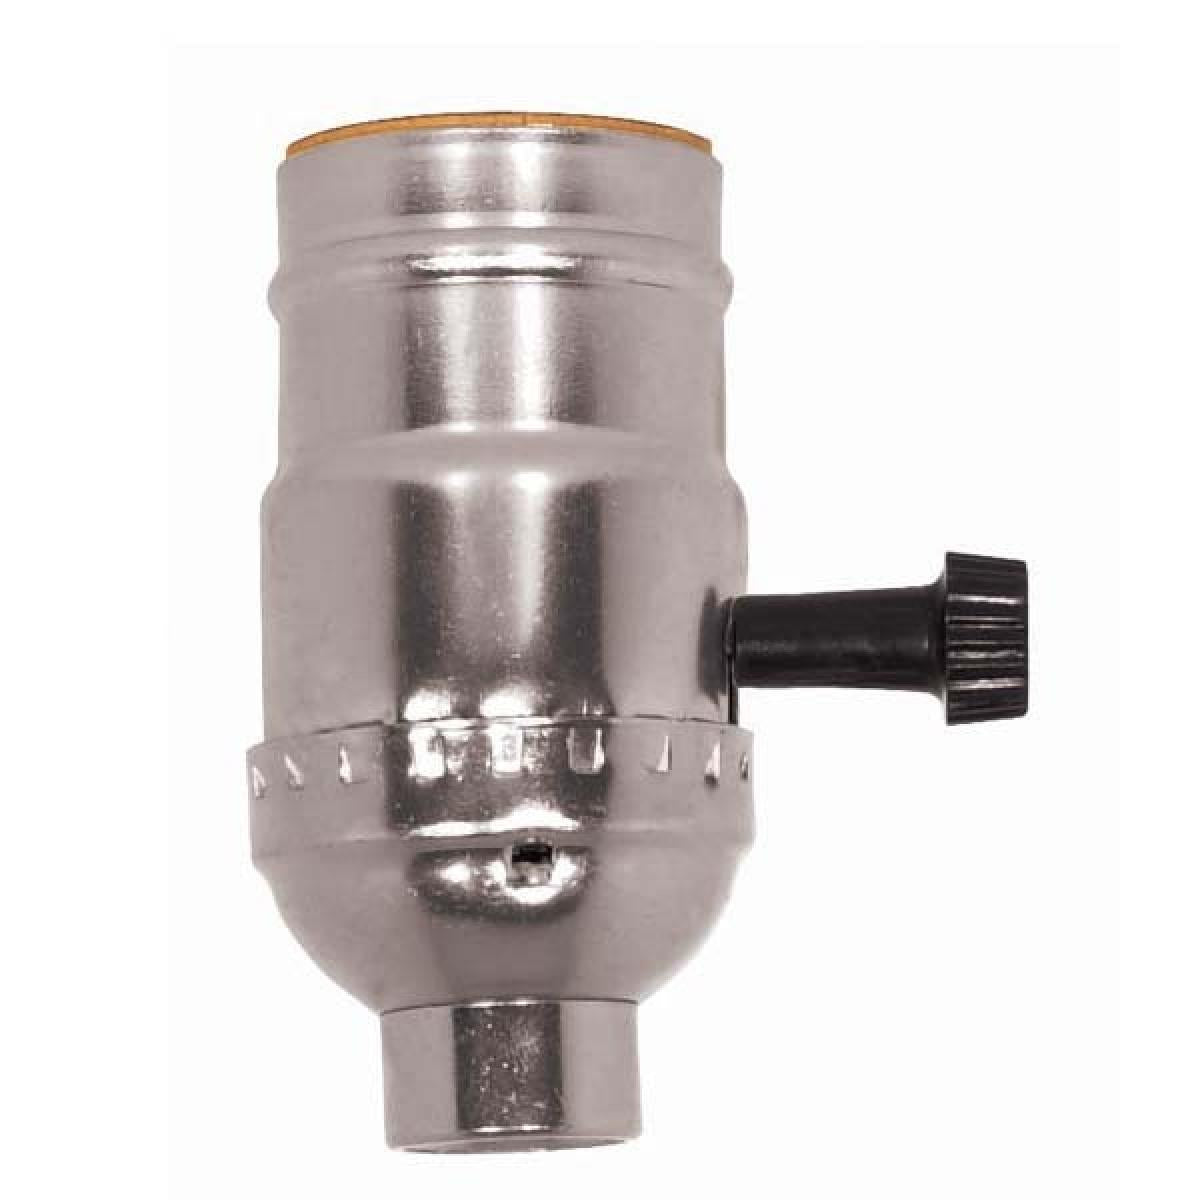 Satco 80-1005 3-Way (2 Circuit) Turn Knob Socket With Removable Knob 1/4 IPS Aluminum Nickel Finish 250W 250V